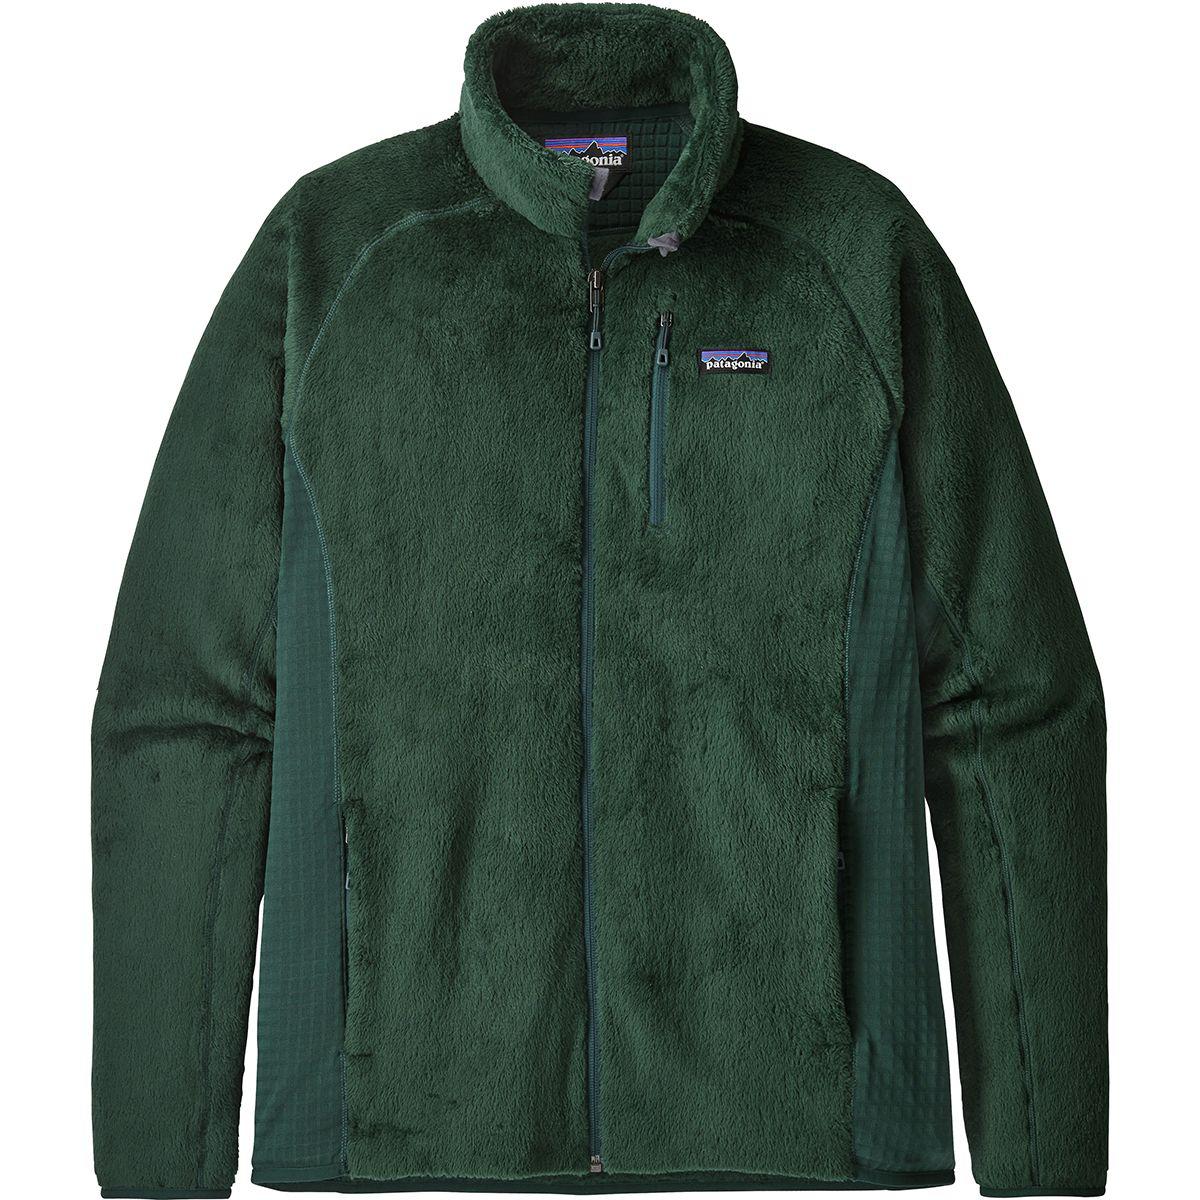 Patagonia R2 Fleece Jacket in Green for Men - Lyst